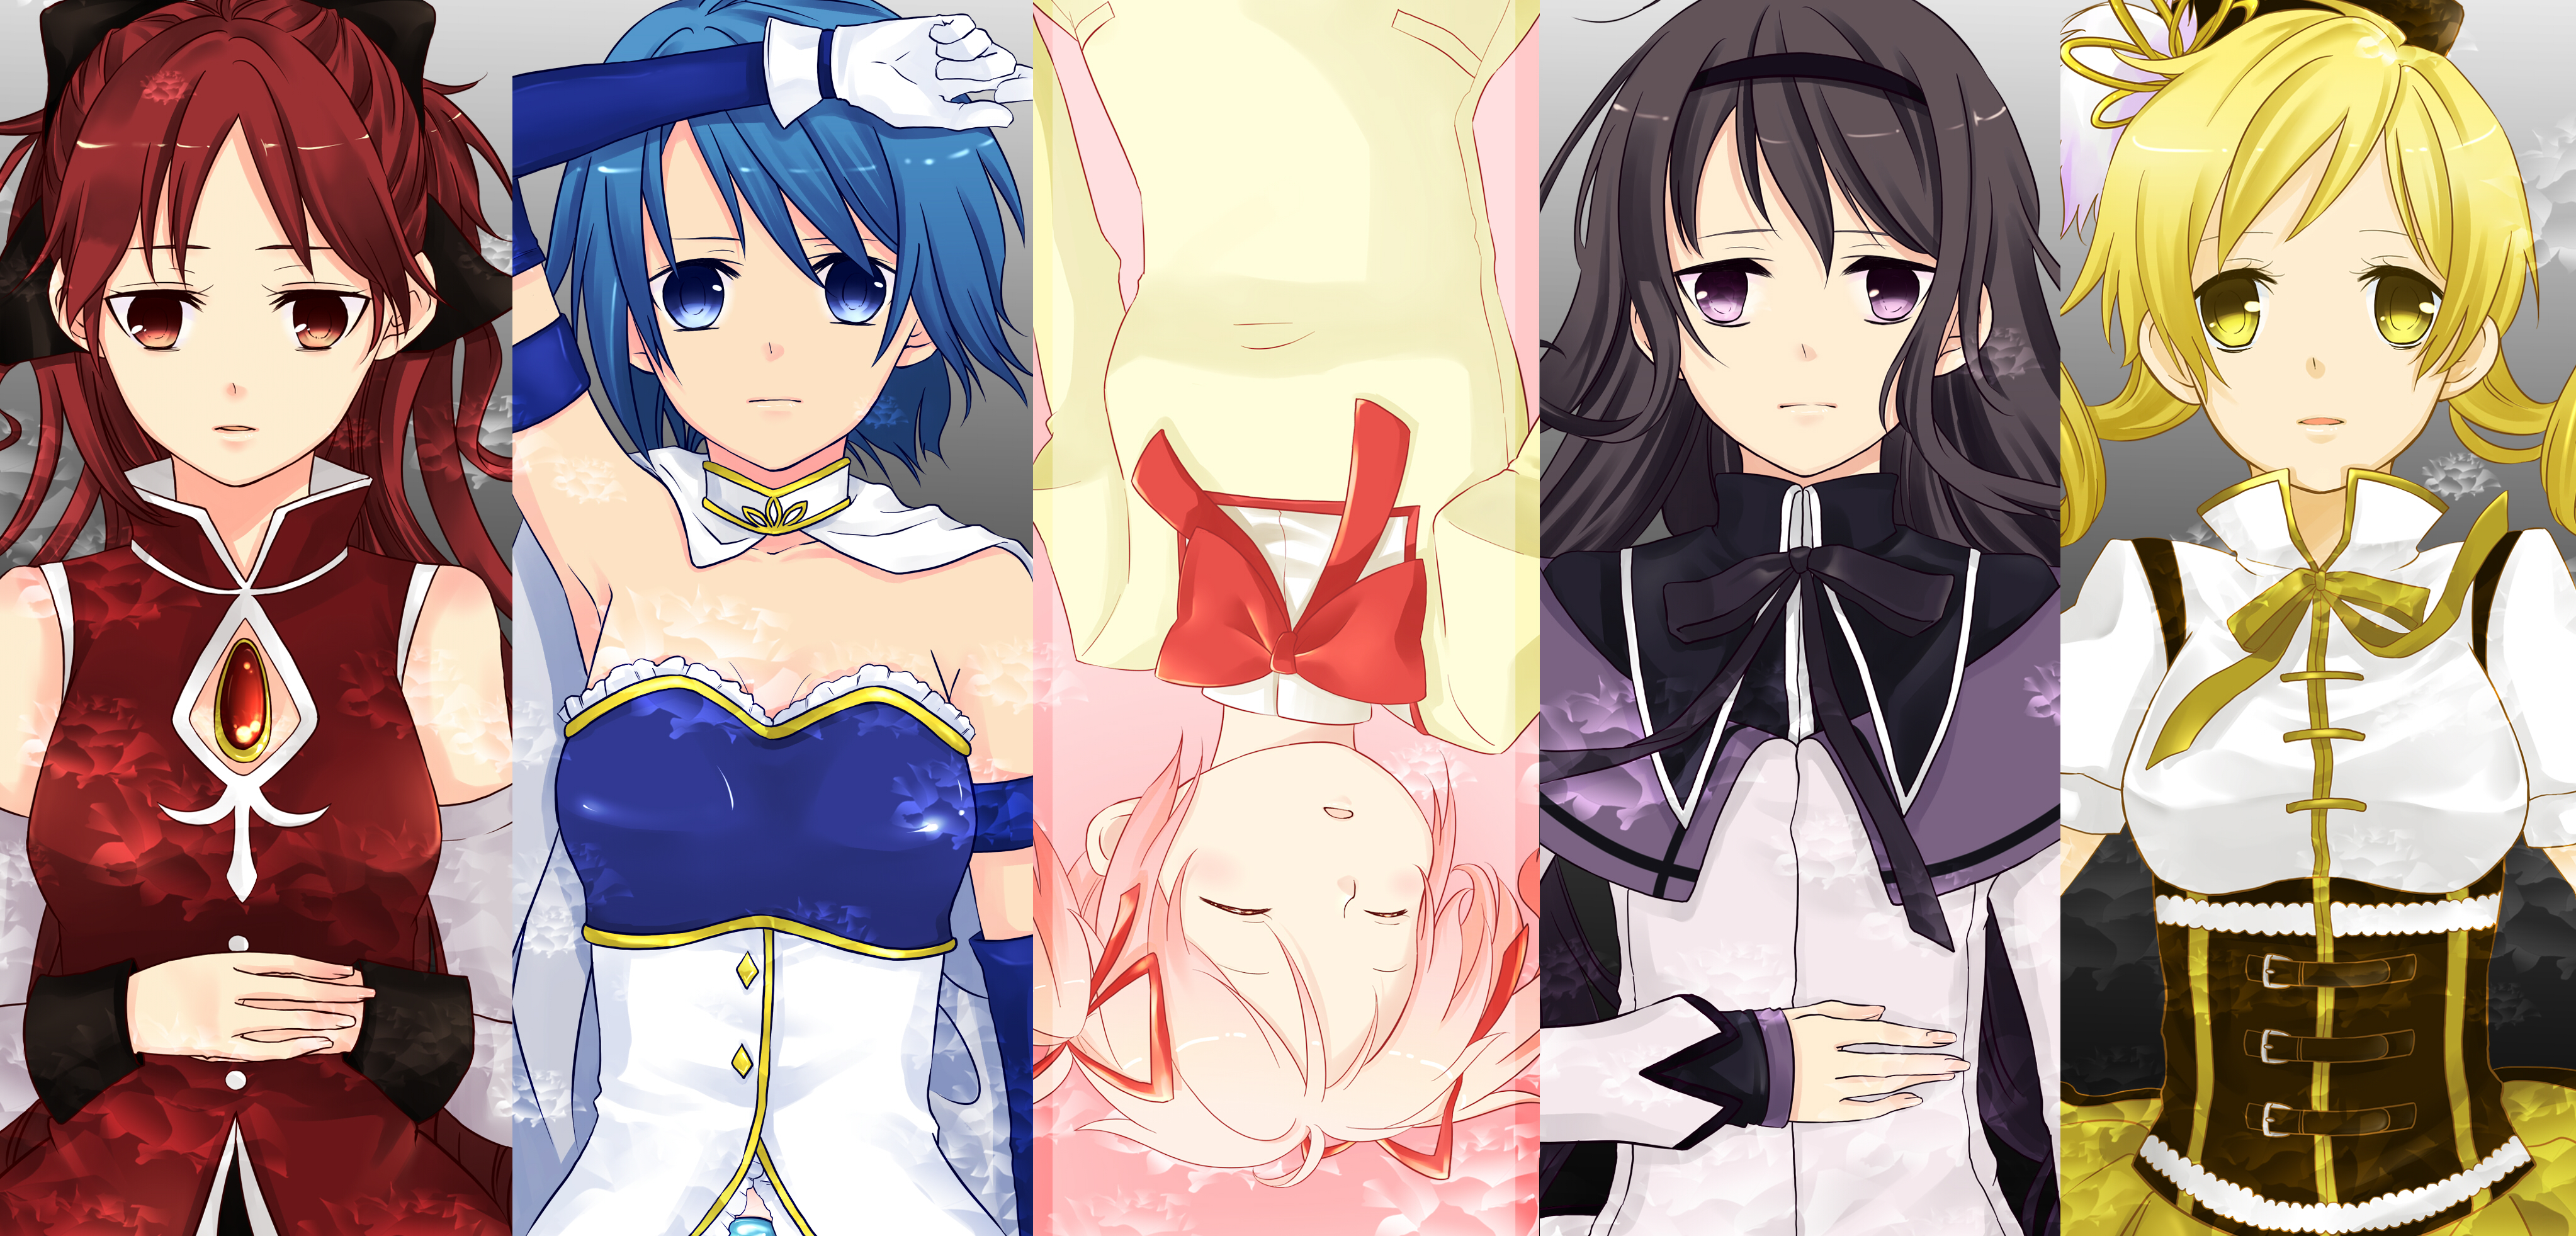 Baixe gratuitamente a imagem Anime, Kyōko Sakura, Mahô Shôjo Madoka Magika: Puella Magi Madoka Magica, Homura Akemi, Madoka Kaname, Mami Tomoe, Sayaka Miki na área de trabalho do seu PC